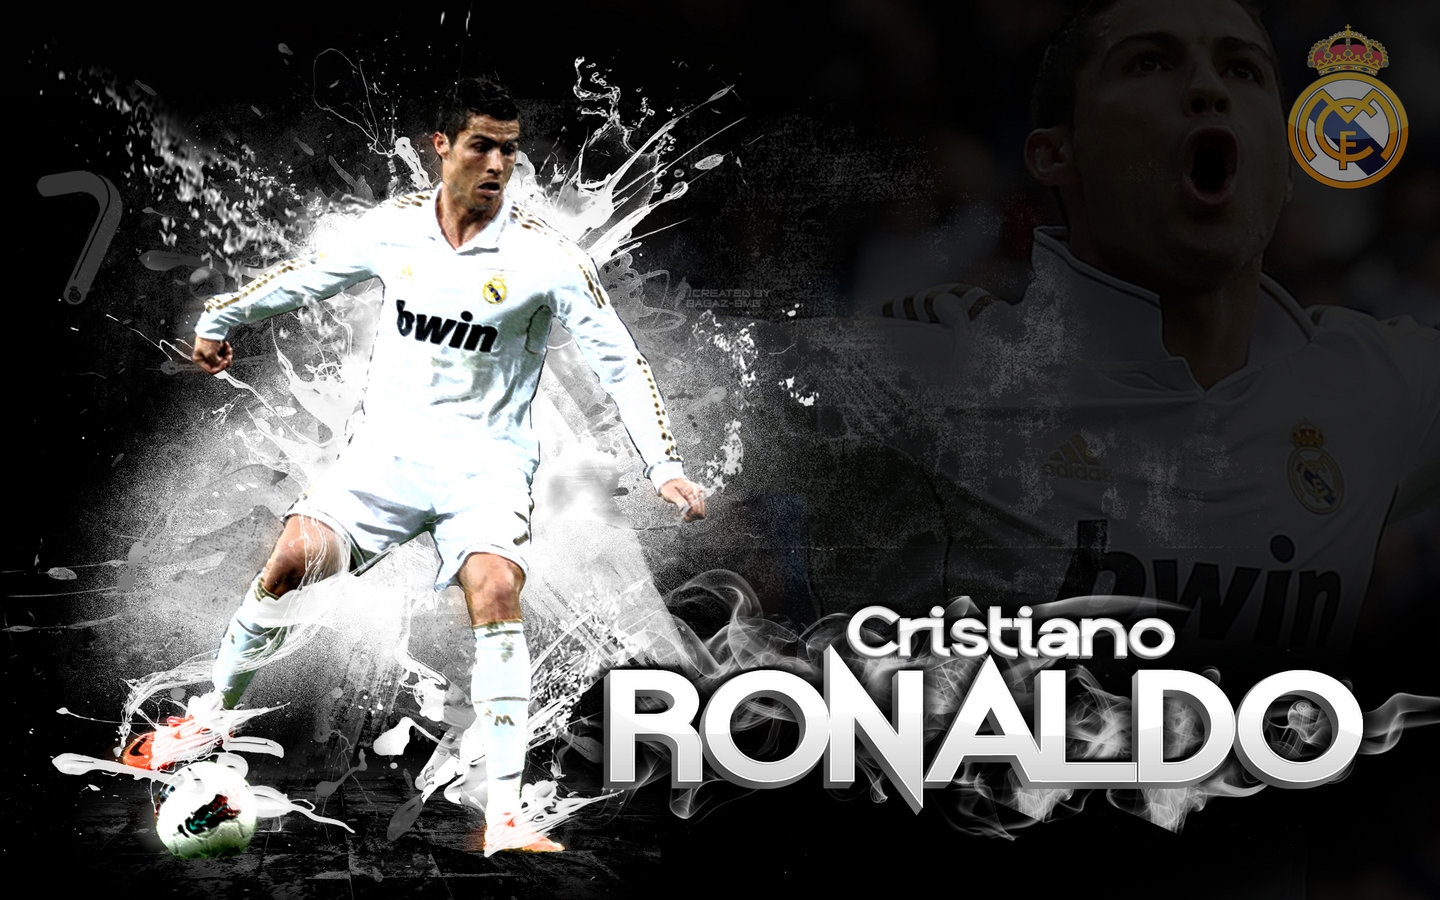 30 Marvelous Cristiano Ronaldo Wallpaper Photo Portrays